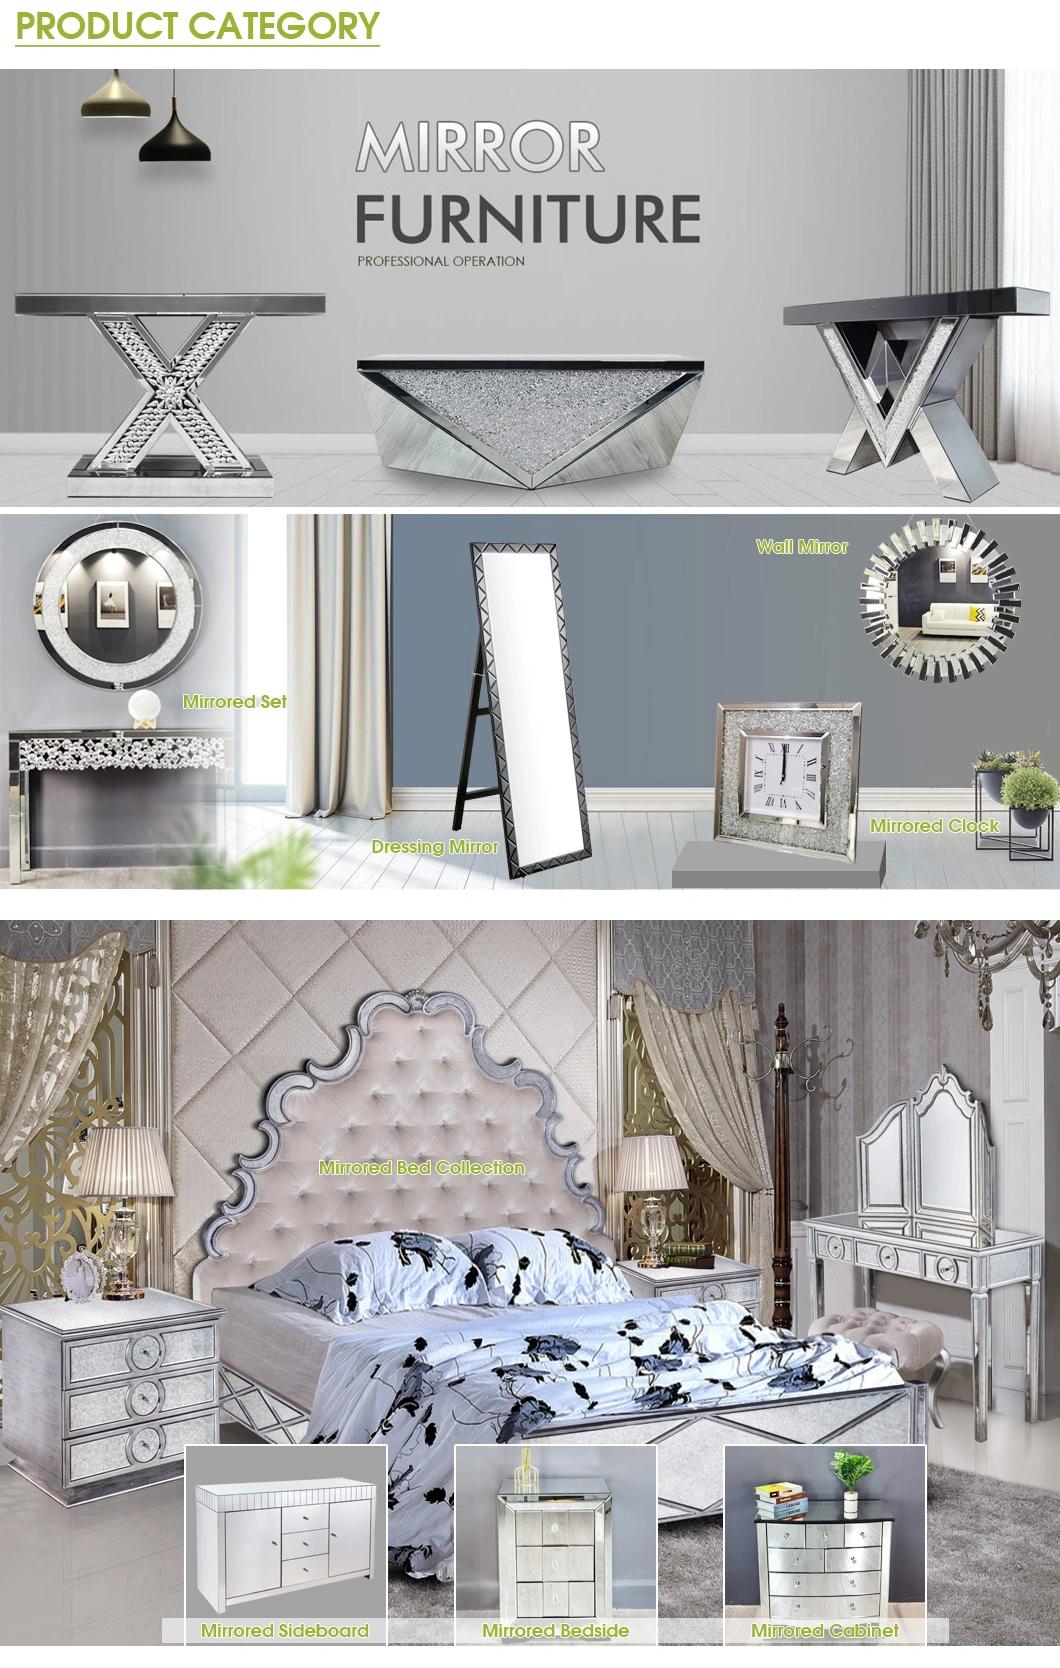 Low Price Brand Durable Elegant Modern Home Bedroom Furniture